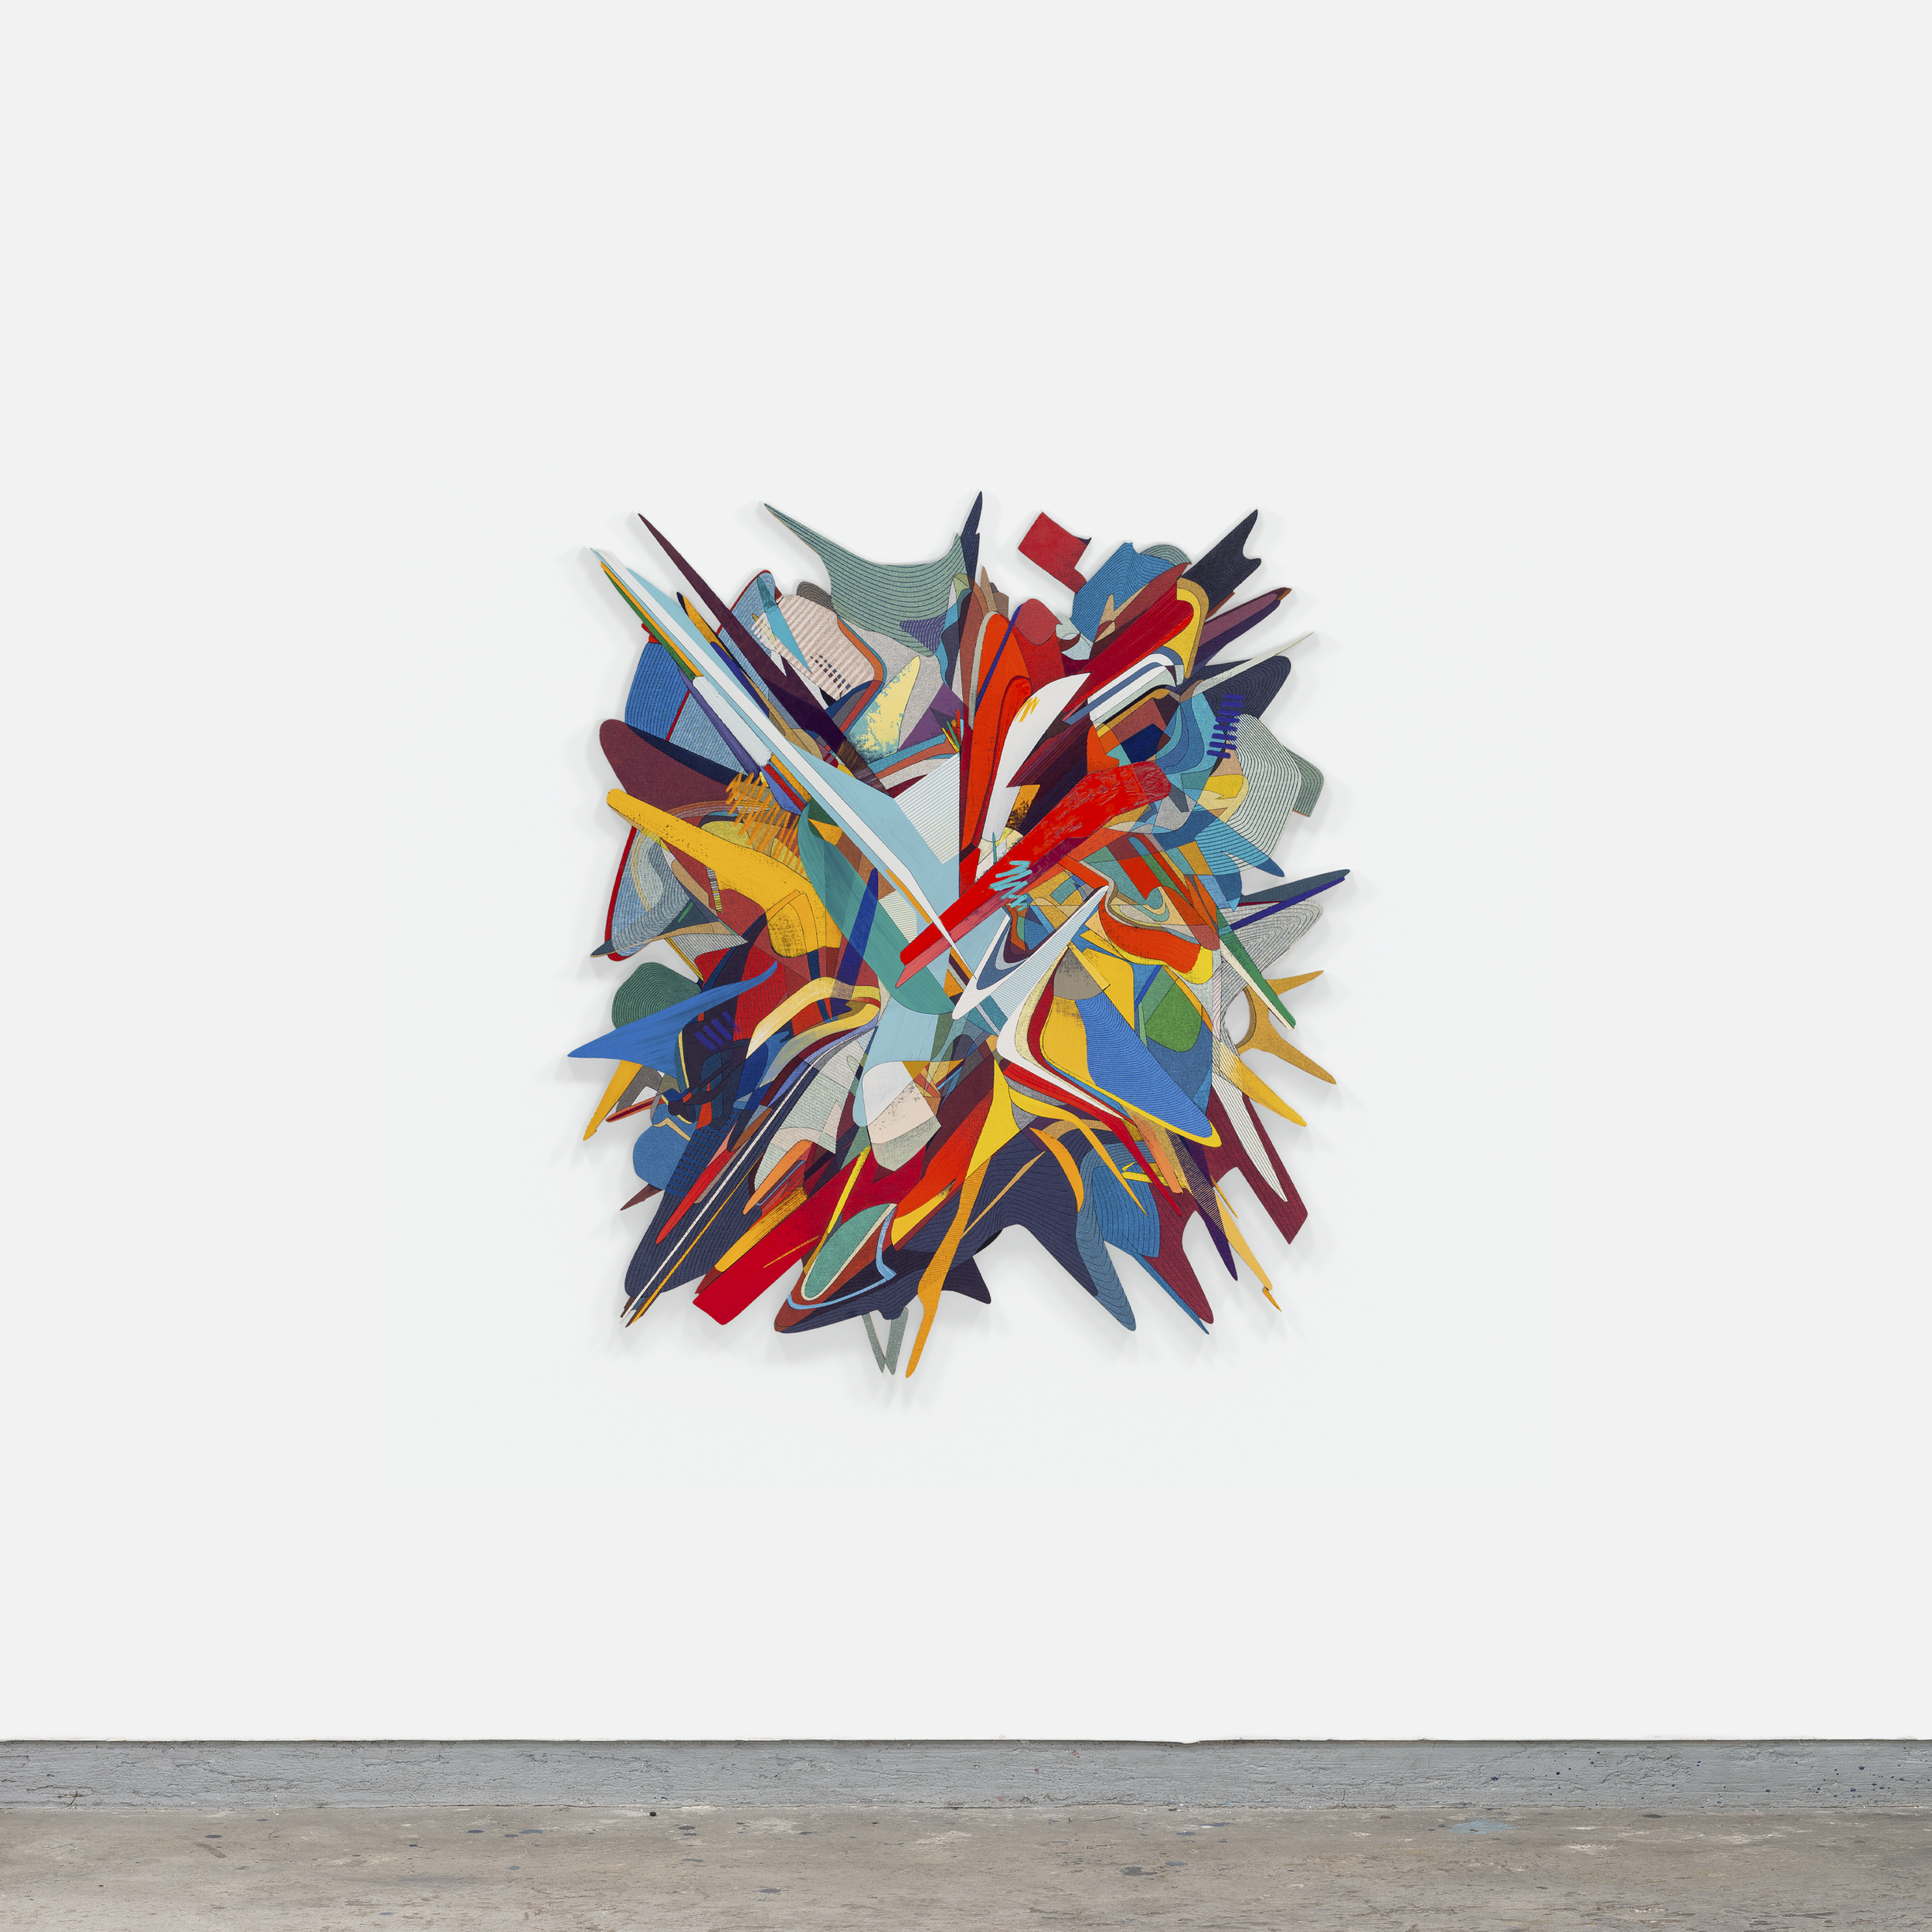 Desfiiguración Cromática, Oil & Acrylic on Linen mounted on Panel, 145 x 128 cm, 2021 by Omar Rodriguez-Graham-Muro.png